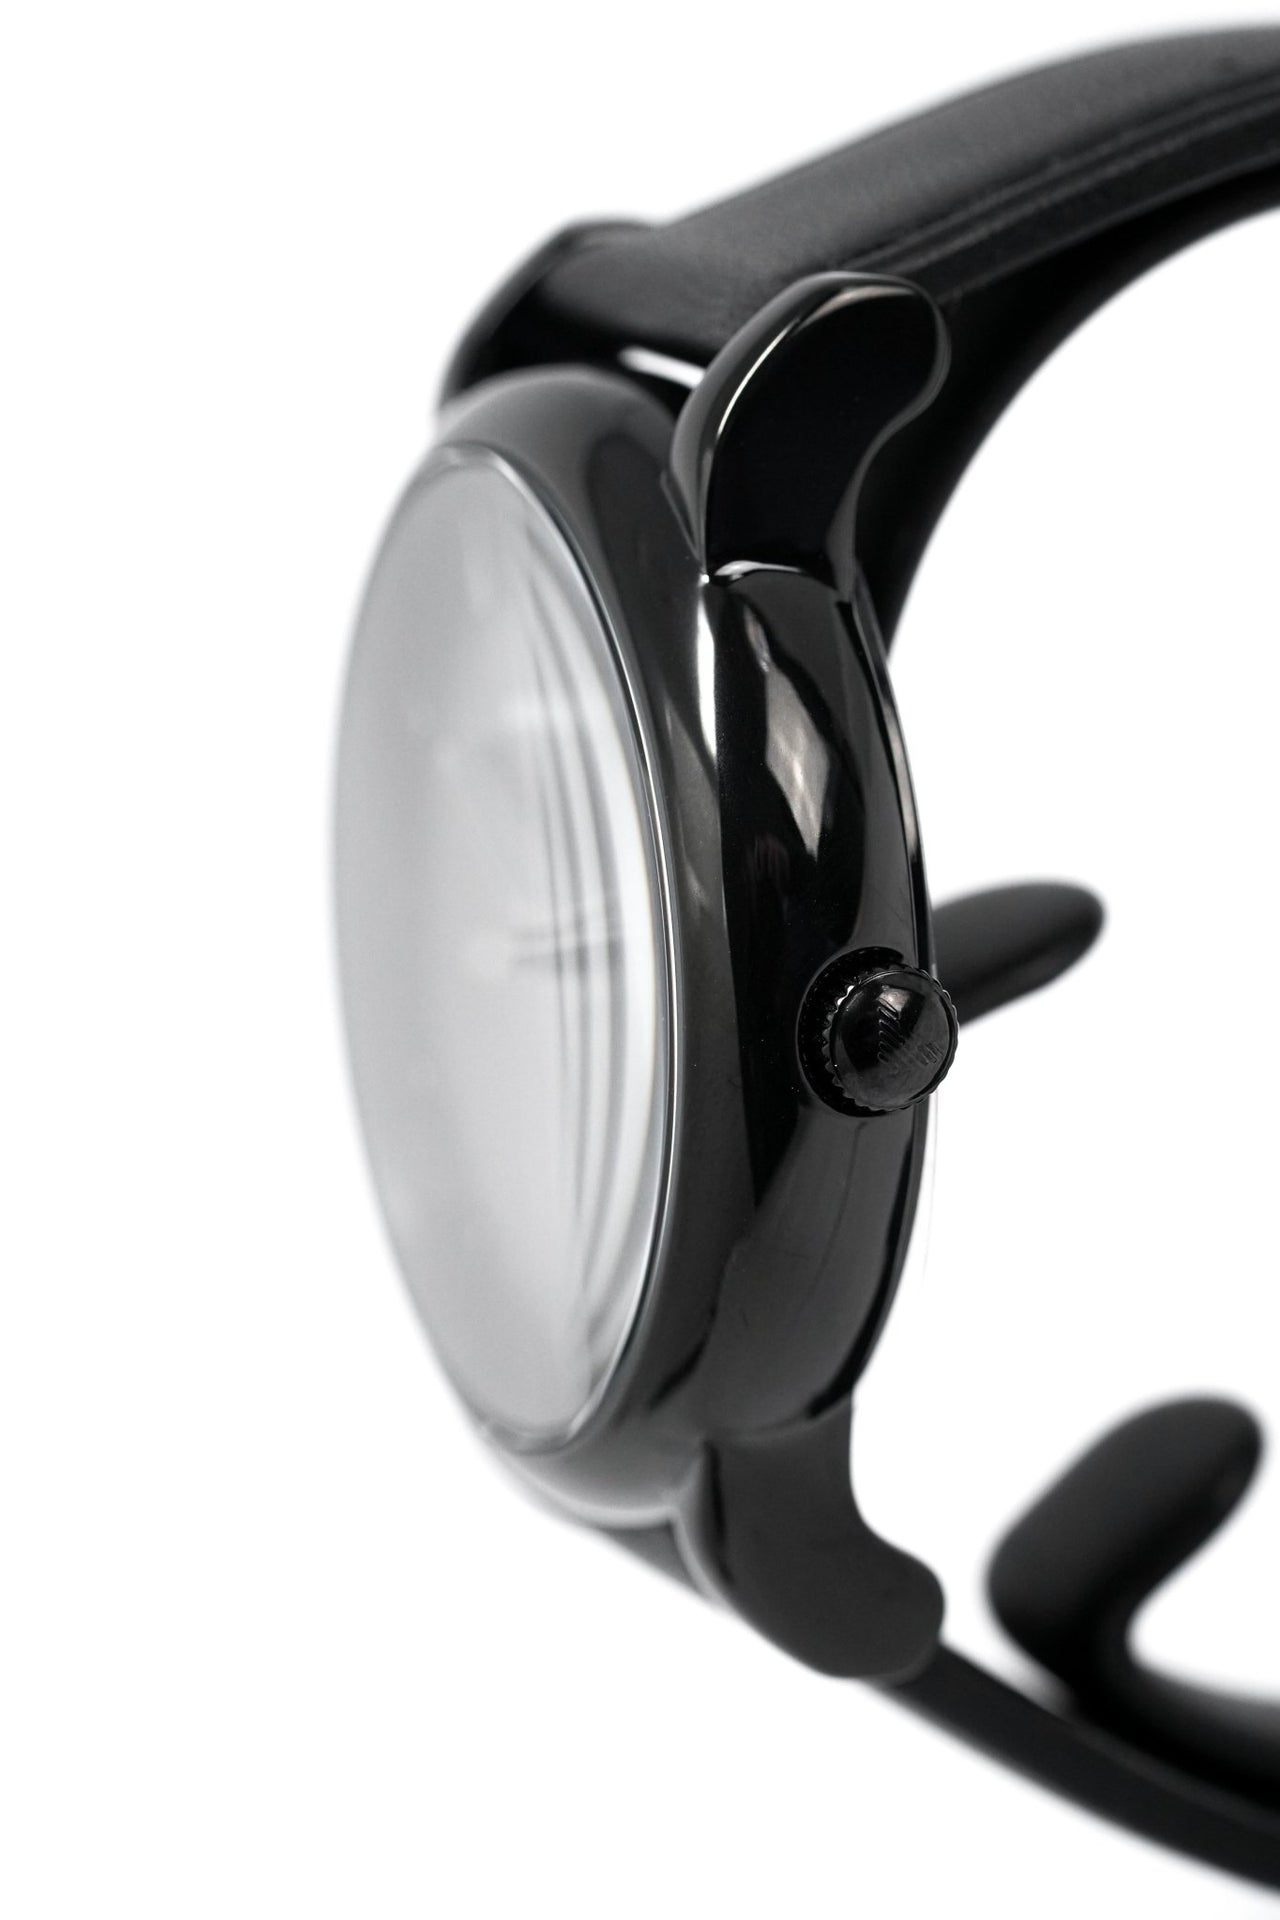 Emporio Armani Men's Classic Watch Black PVD AR1732 - Watches & Crystals